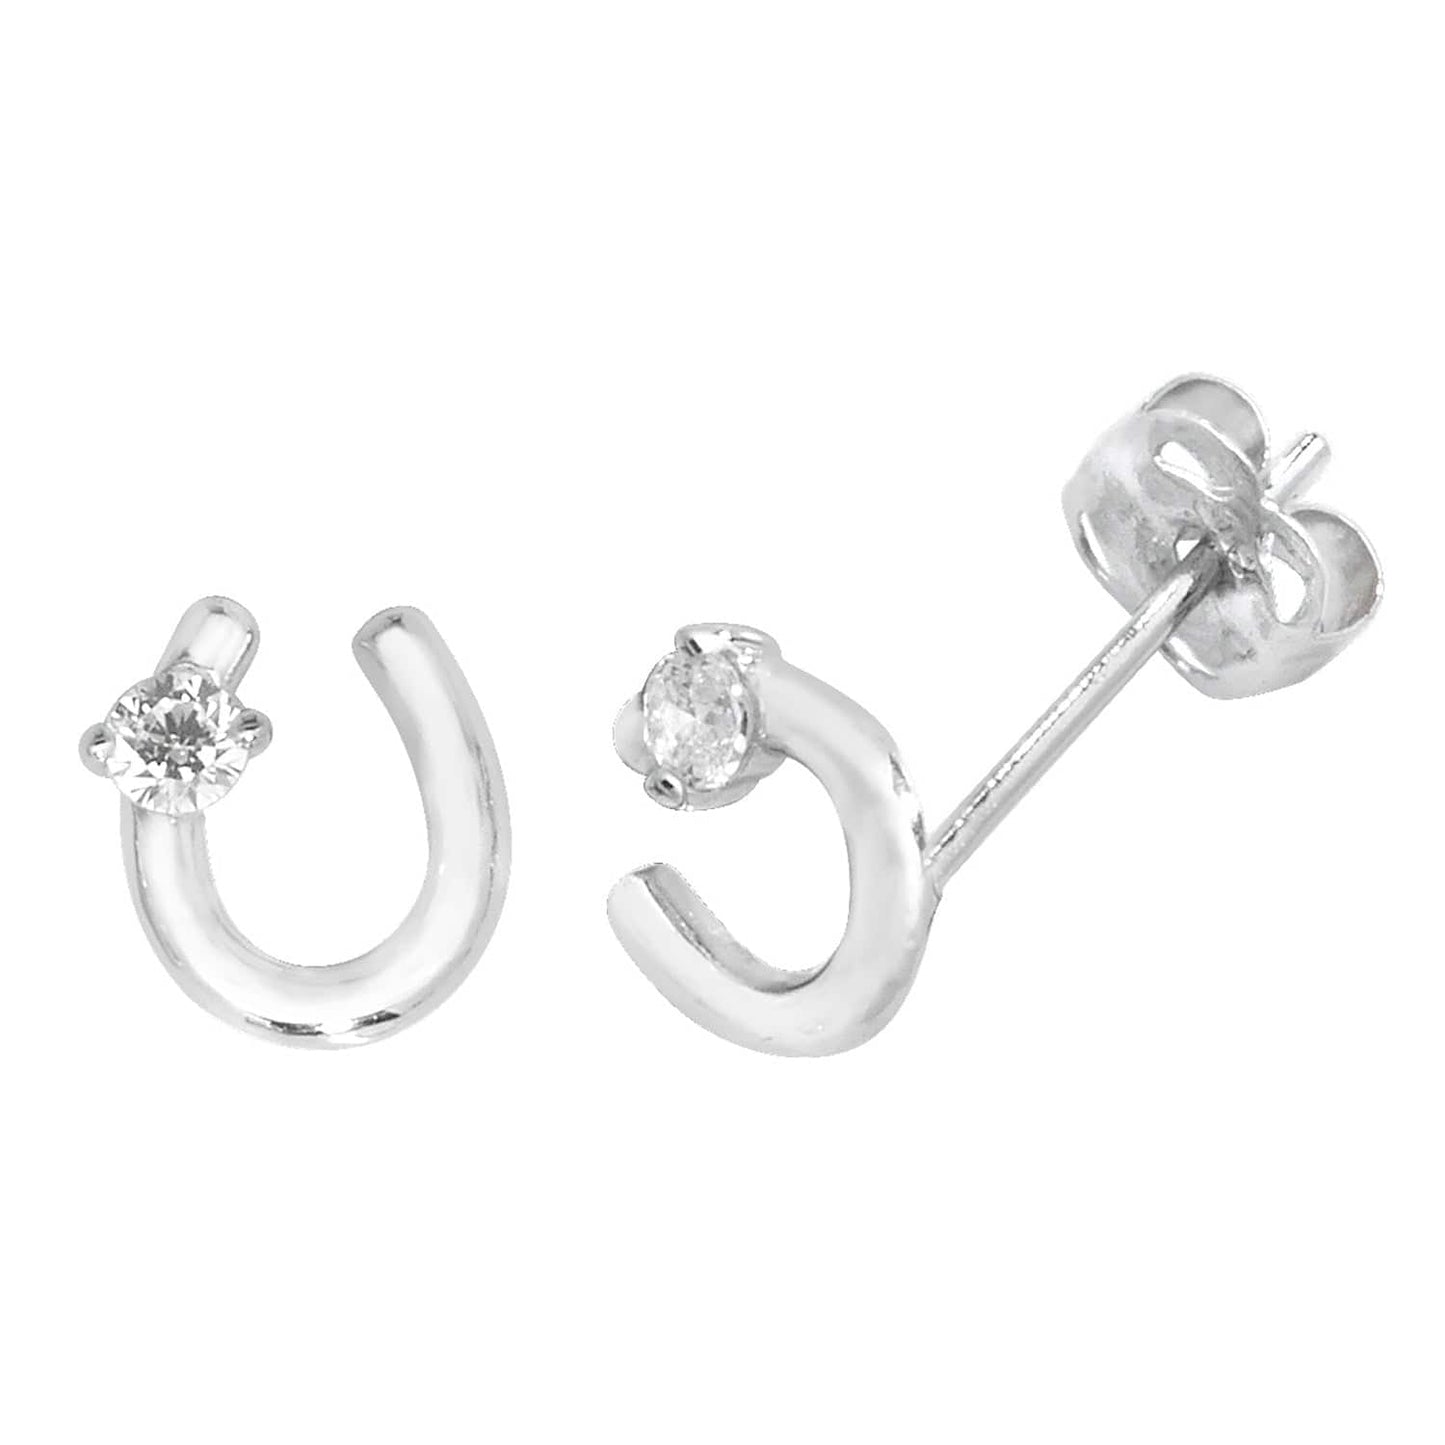 PEGASUS JEWELLERY Earrings 9ct White Gold Horseshoe Earrings